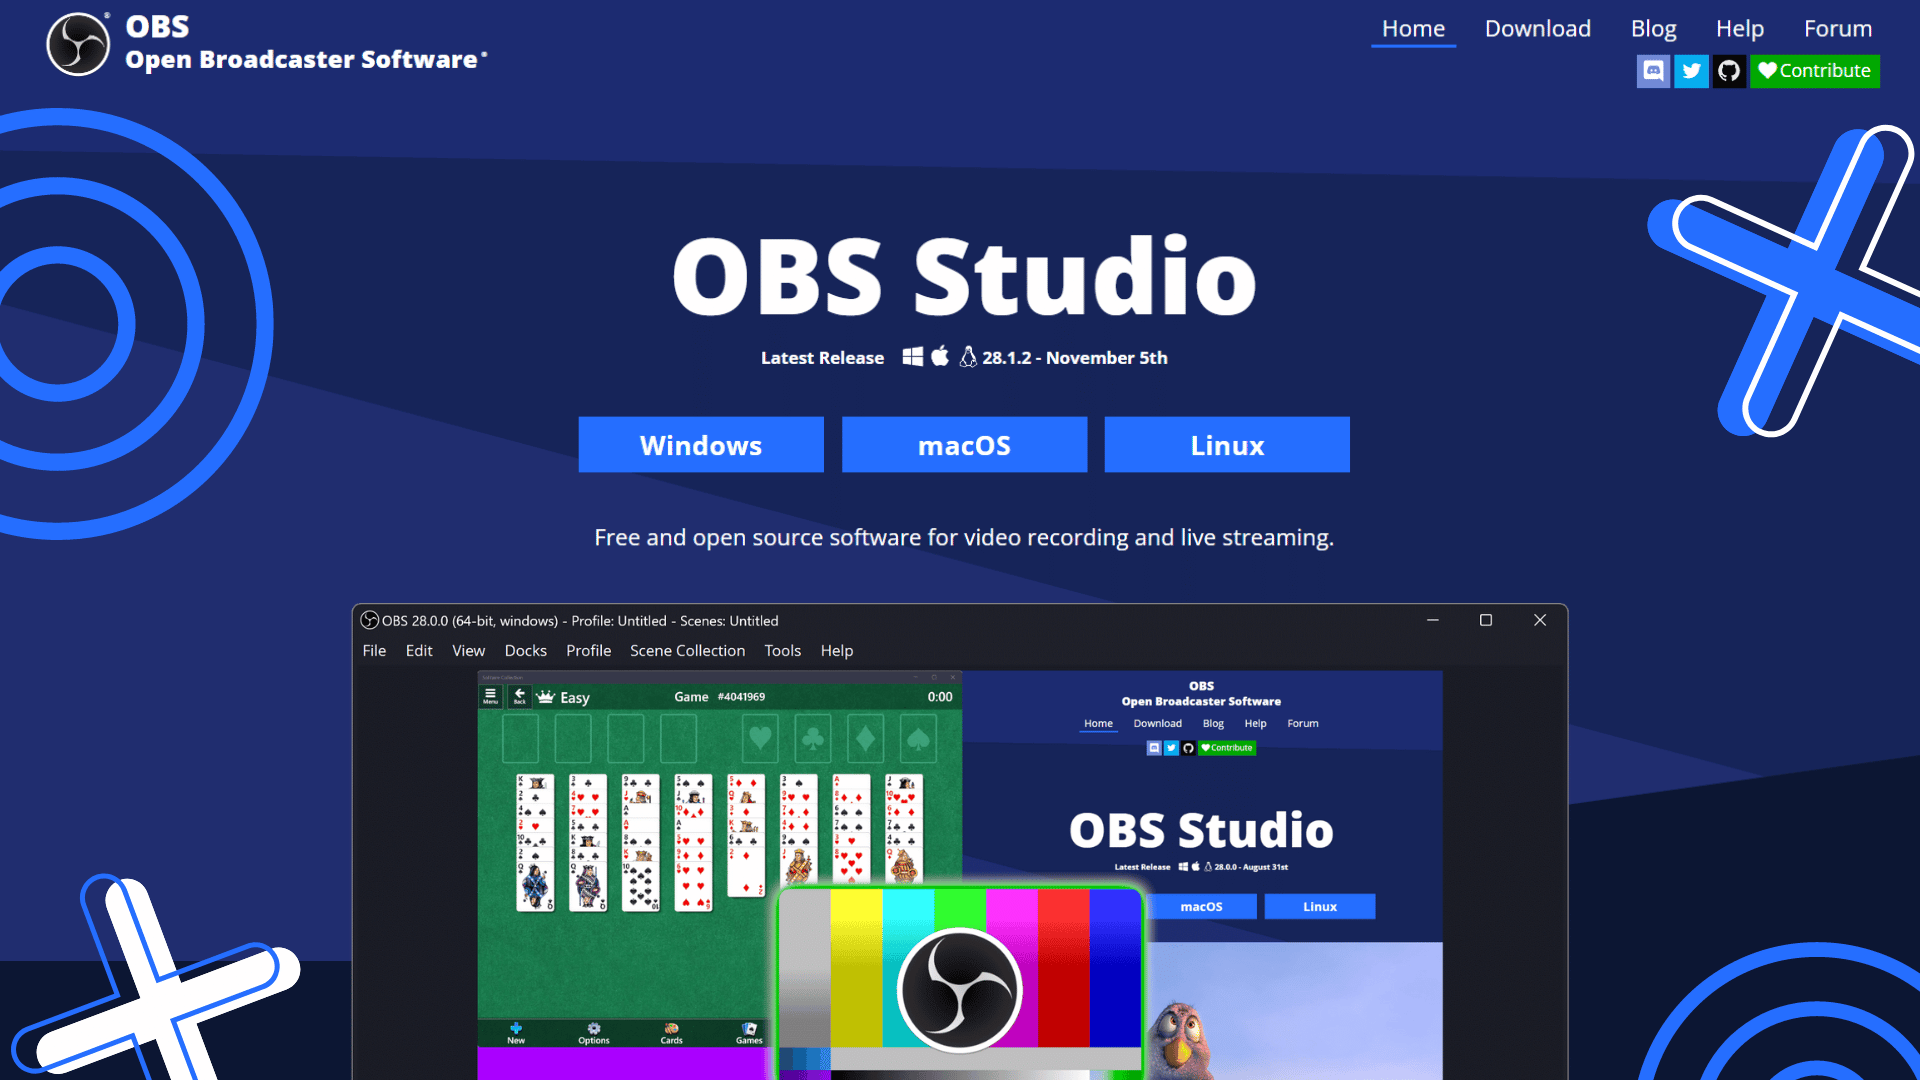 OBS Studio Features